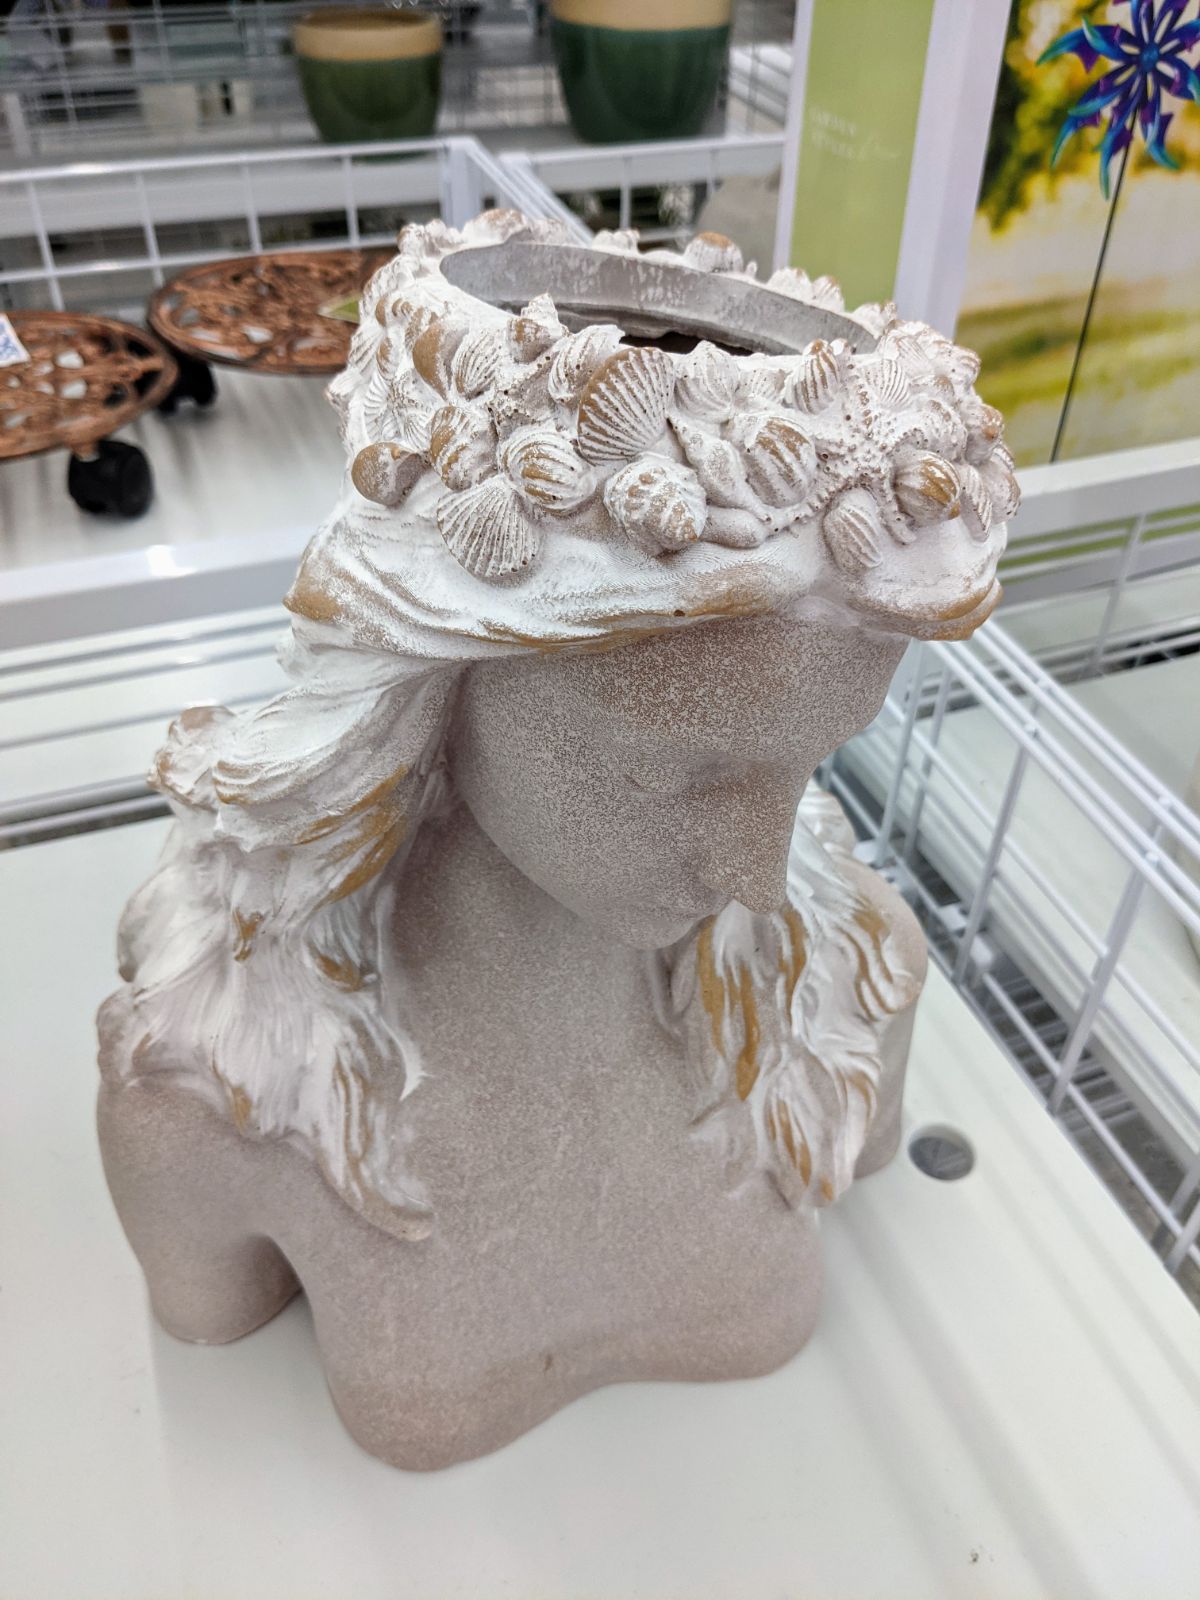 Seashell goddess bust planter for sale at Ross in 2023